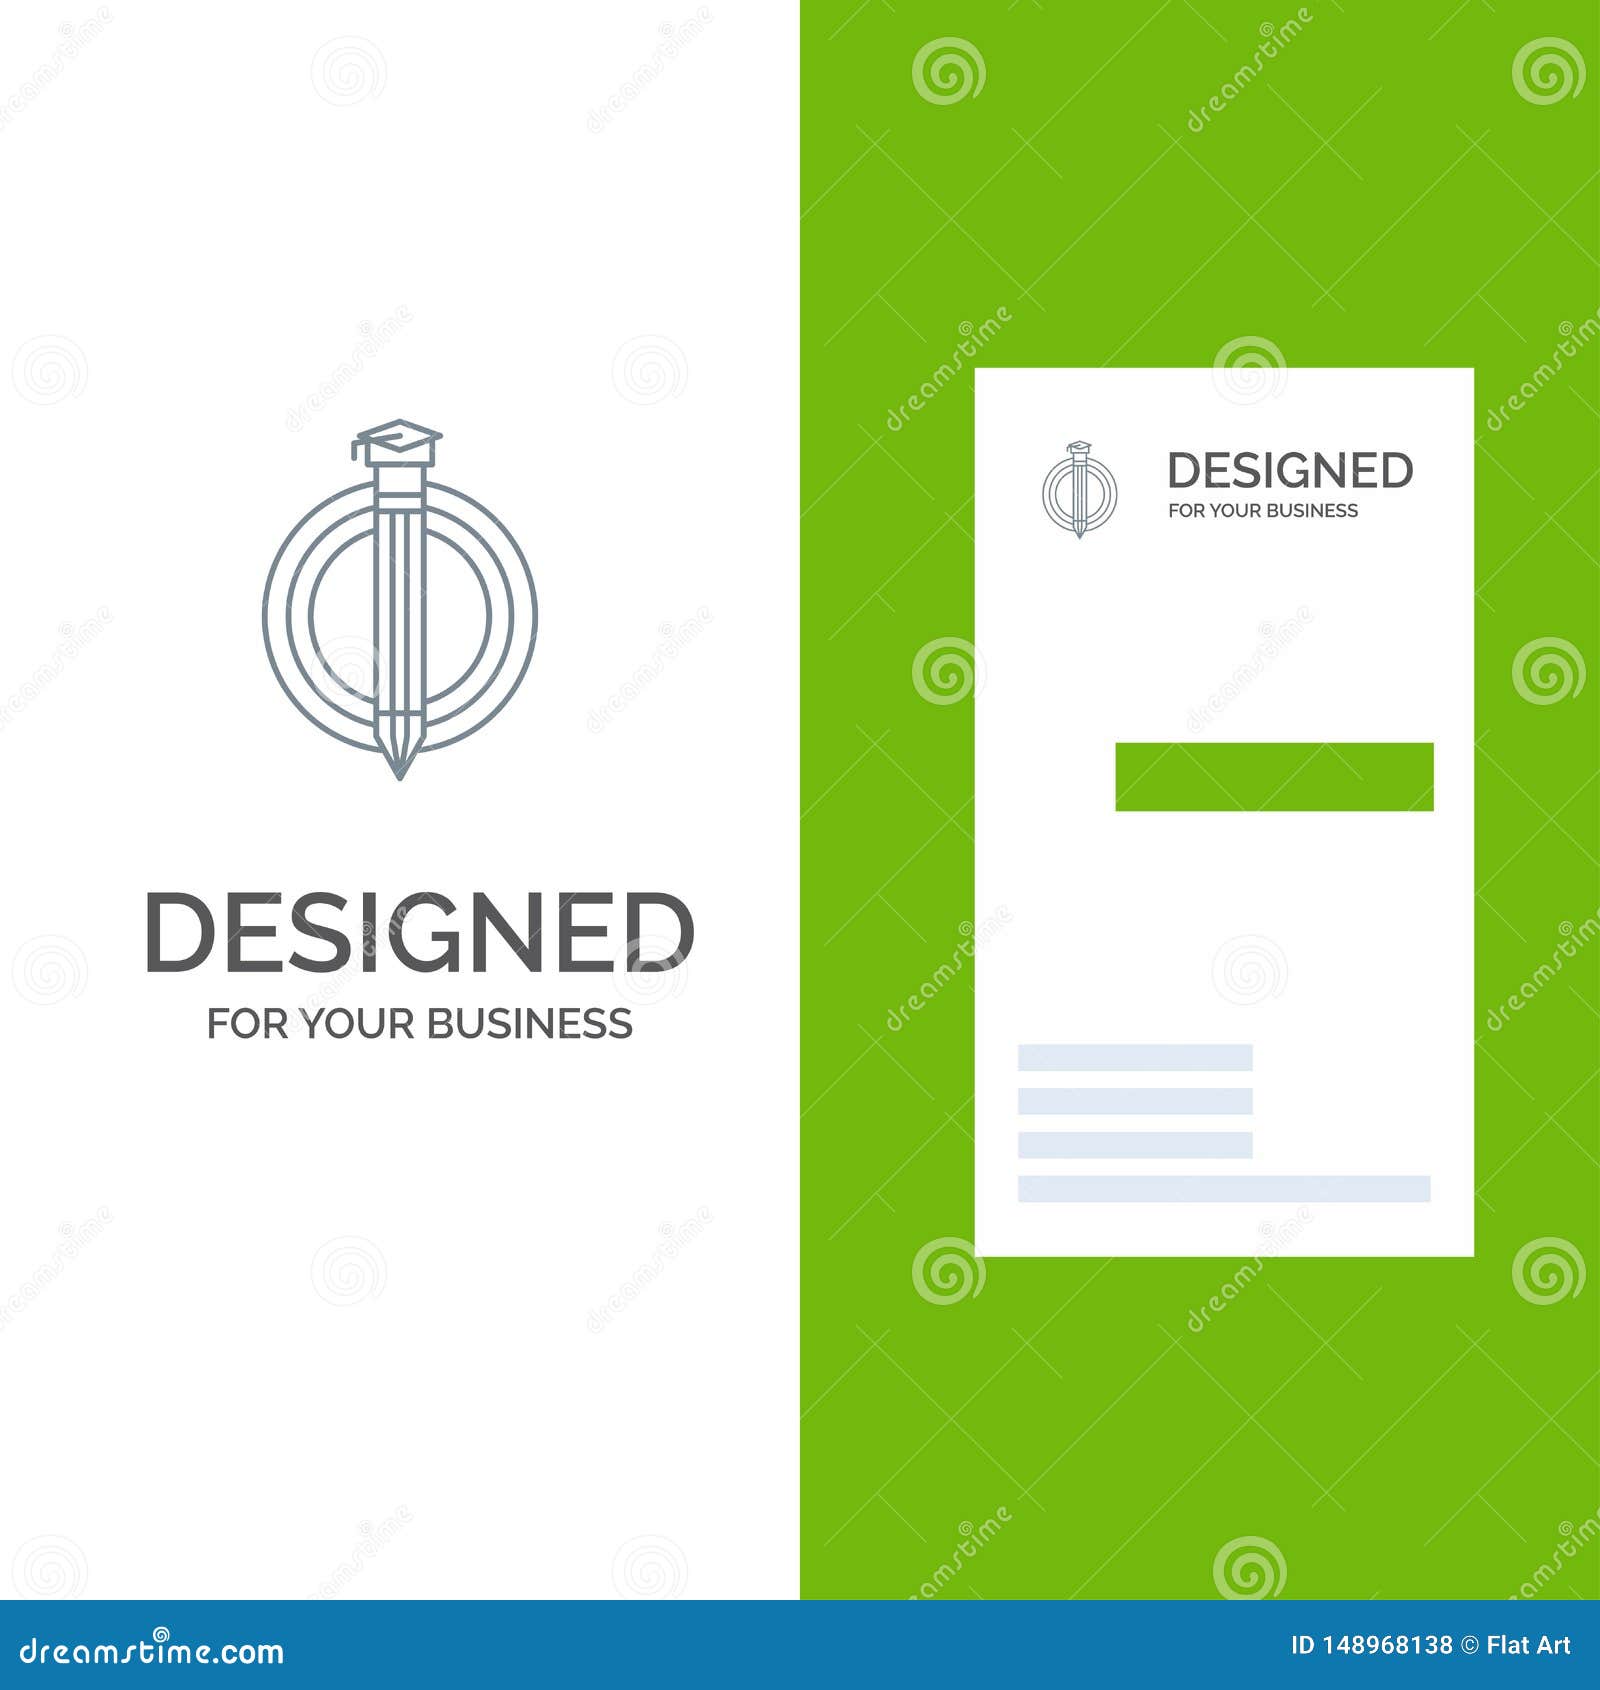 Success, Degree, Bonus, Graduate Grey Logo Design and Business For Graduate Student Business Cards Template